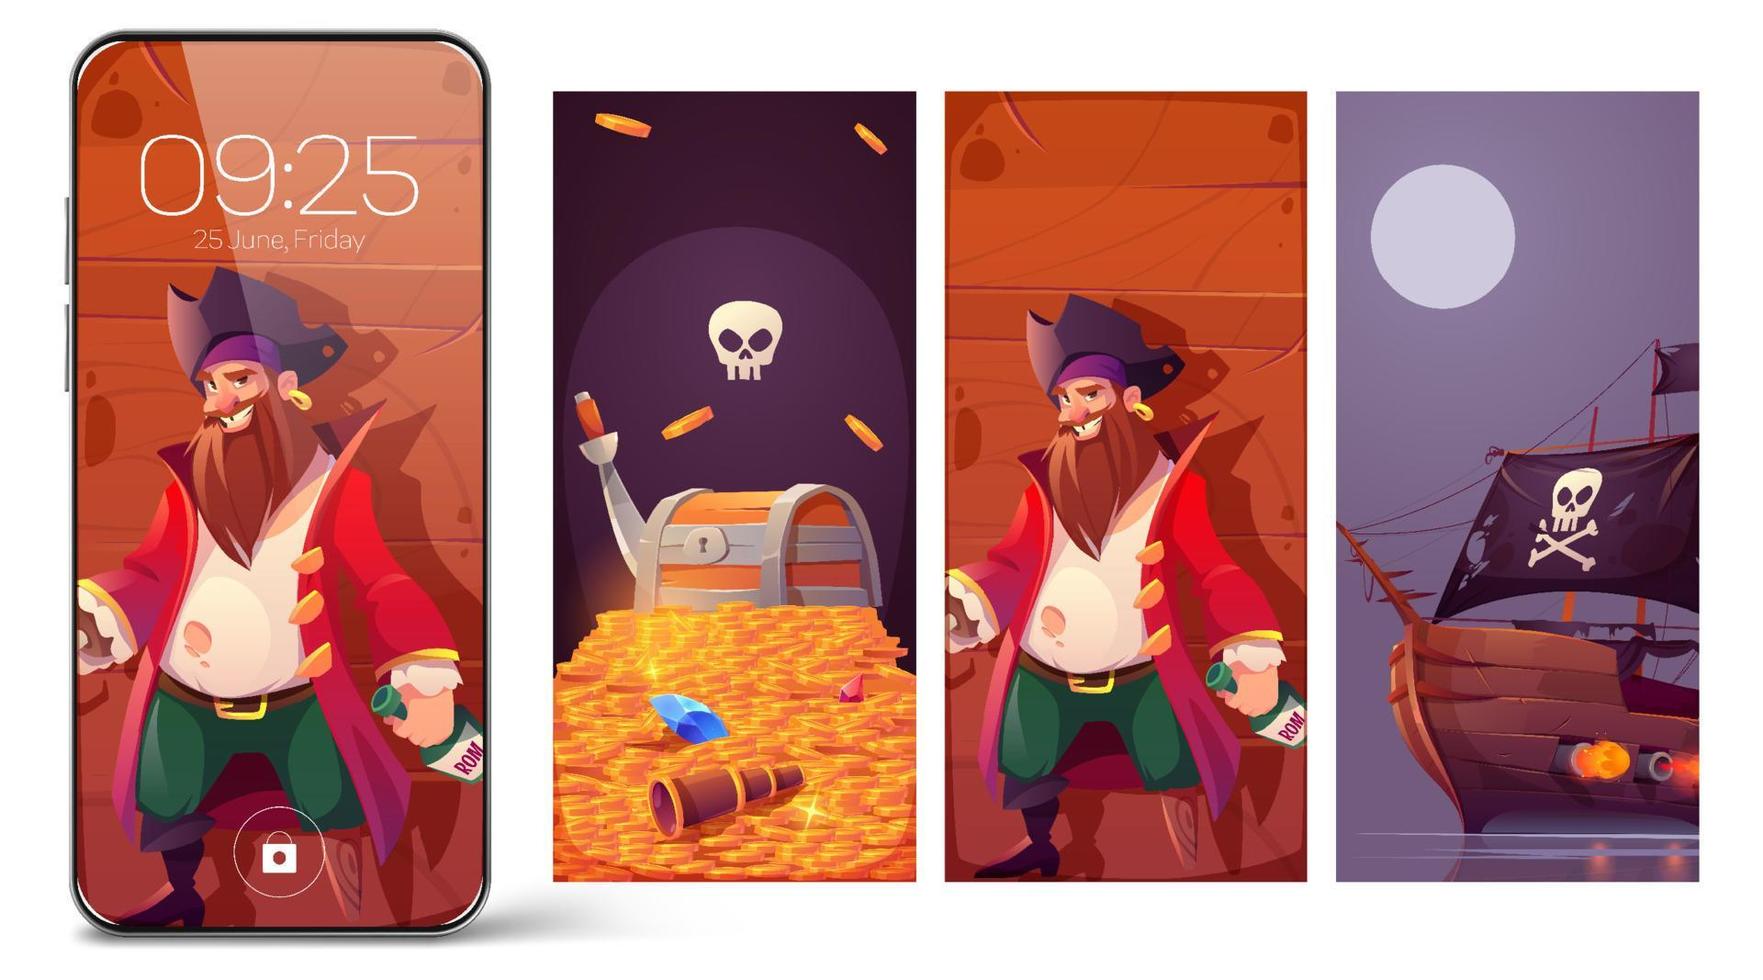 Pirate theme for smartphone screensaver vector